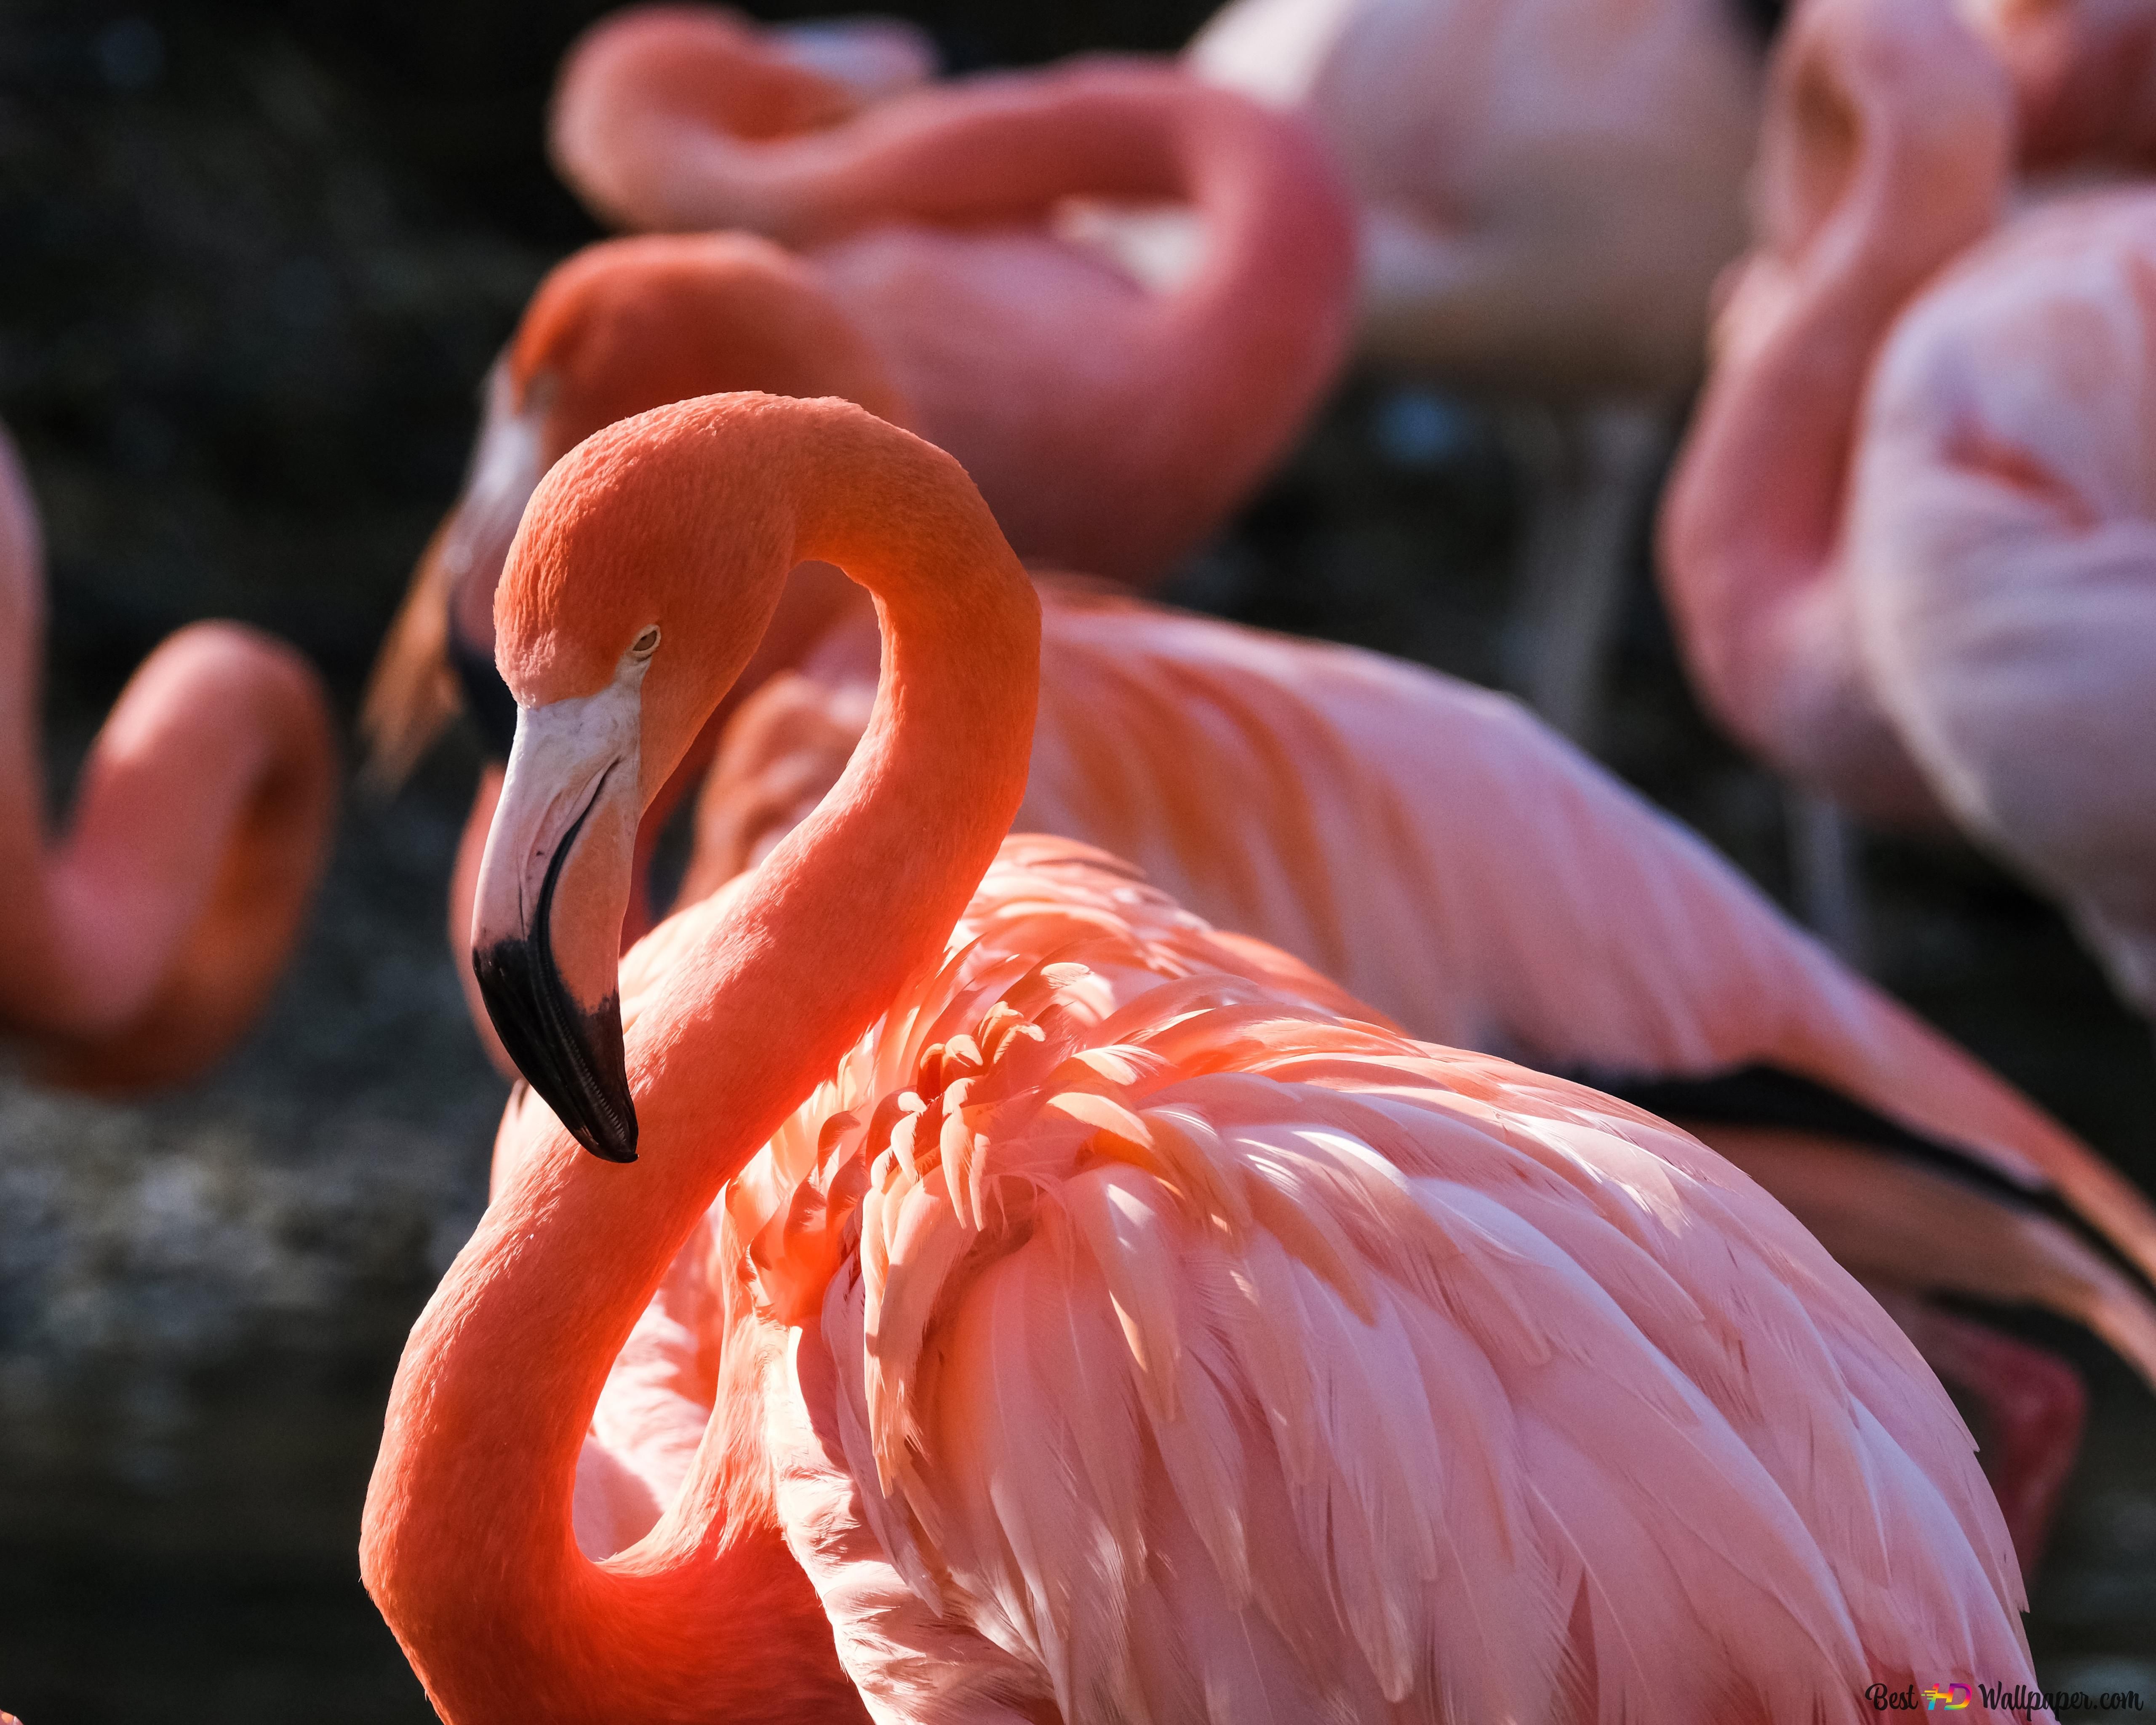 Pretty in pink Flamingo birds 6K wallpaper download